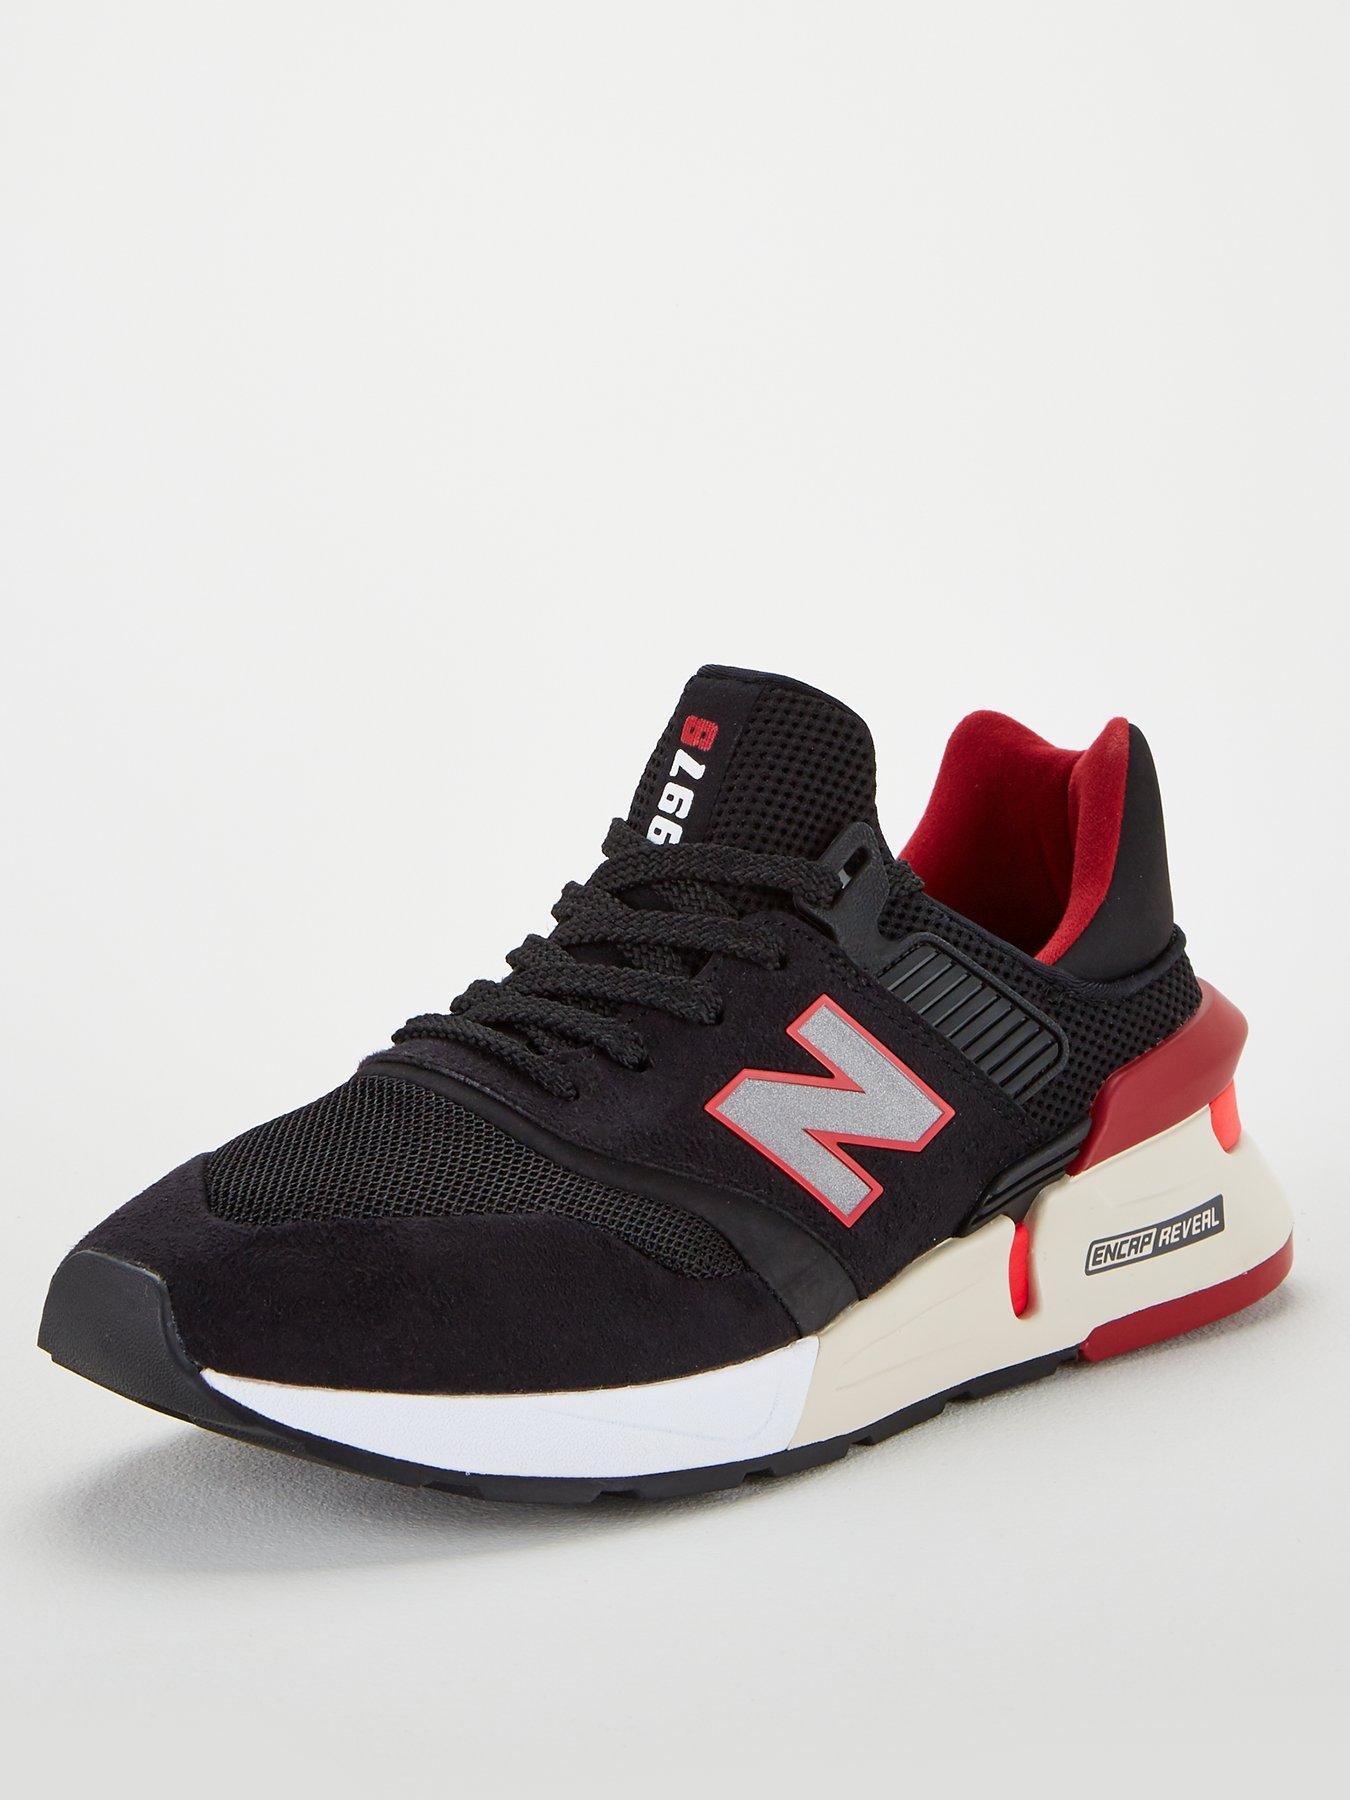 new balance 997s black red